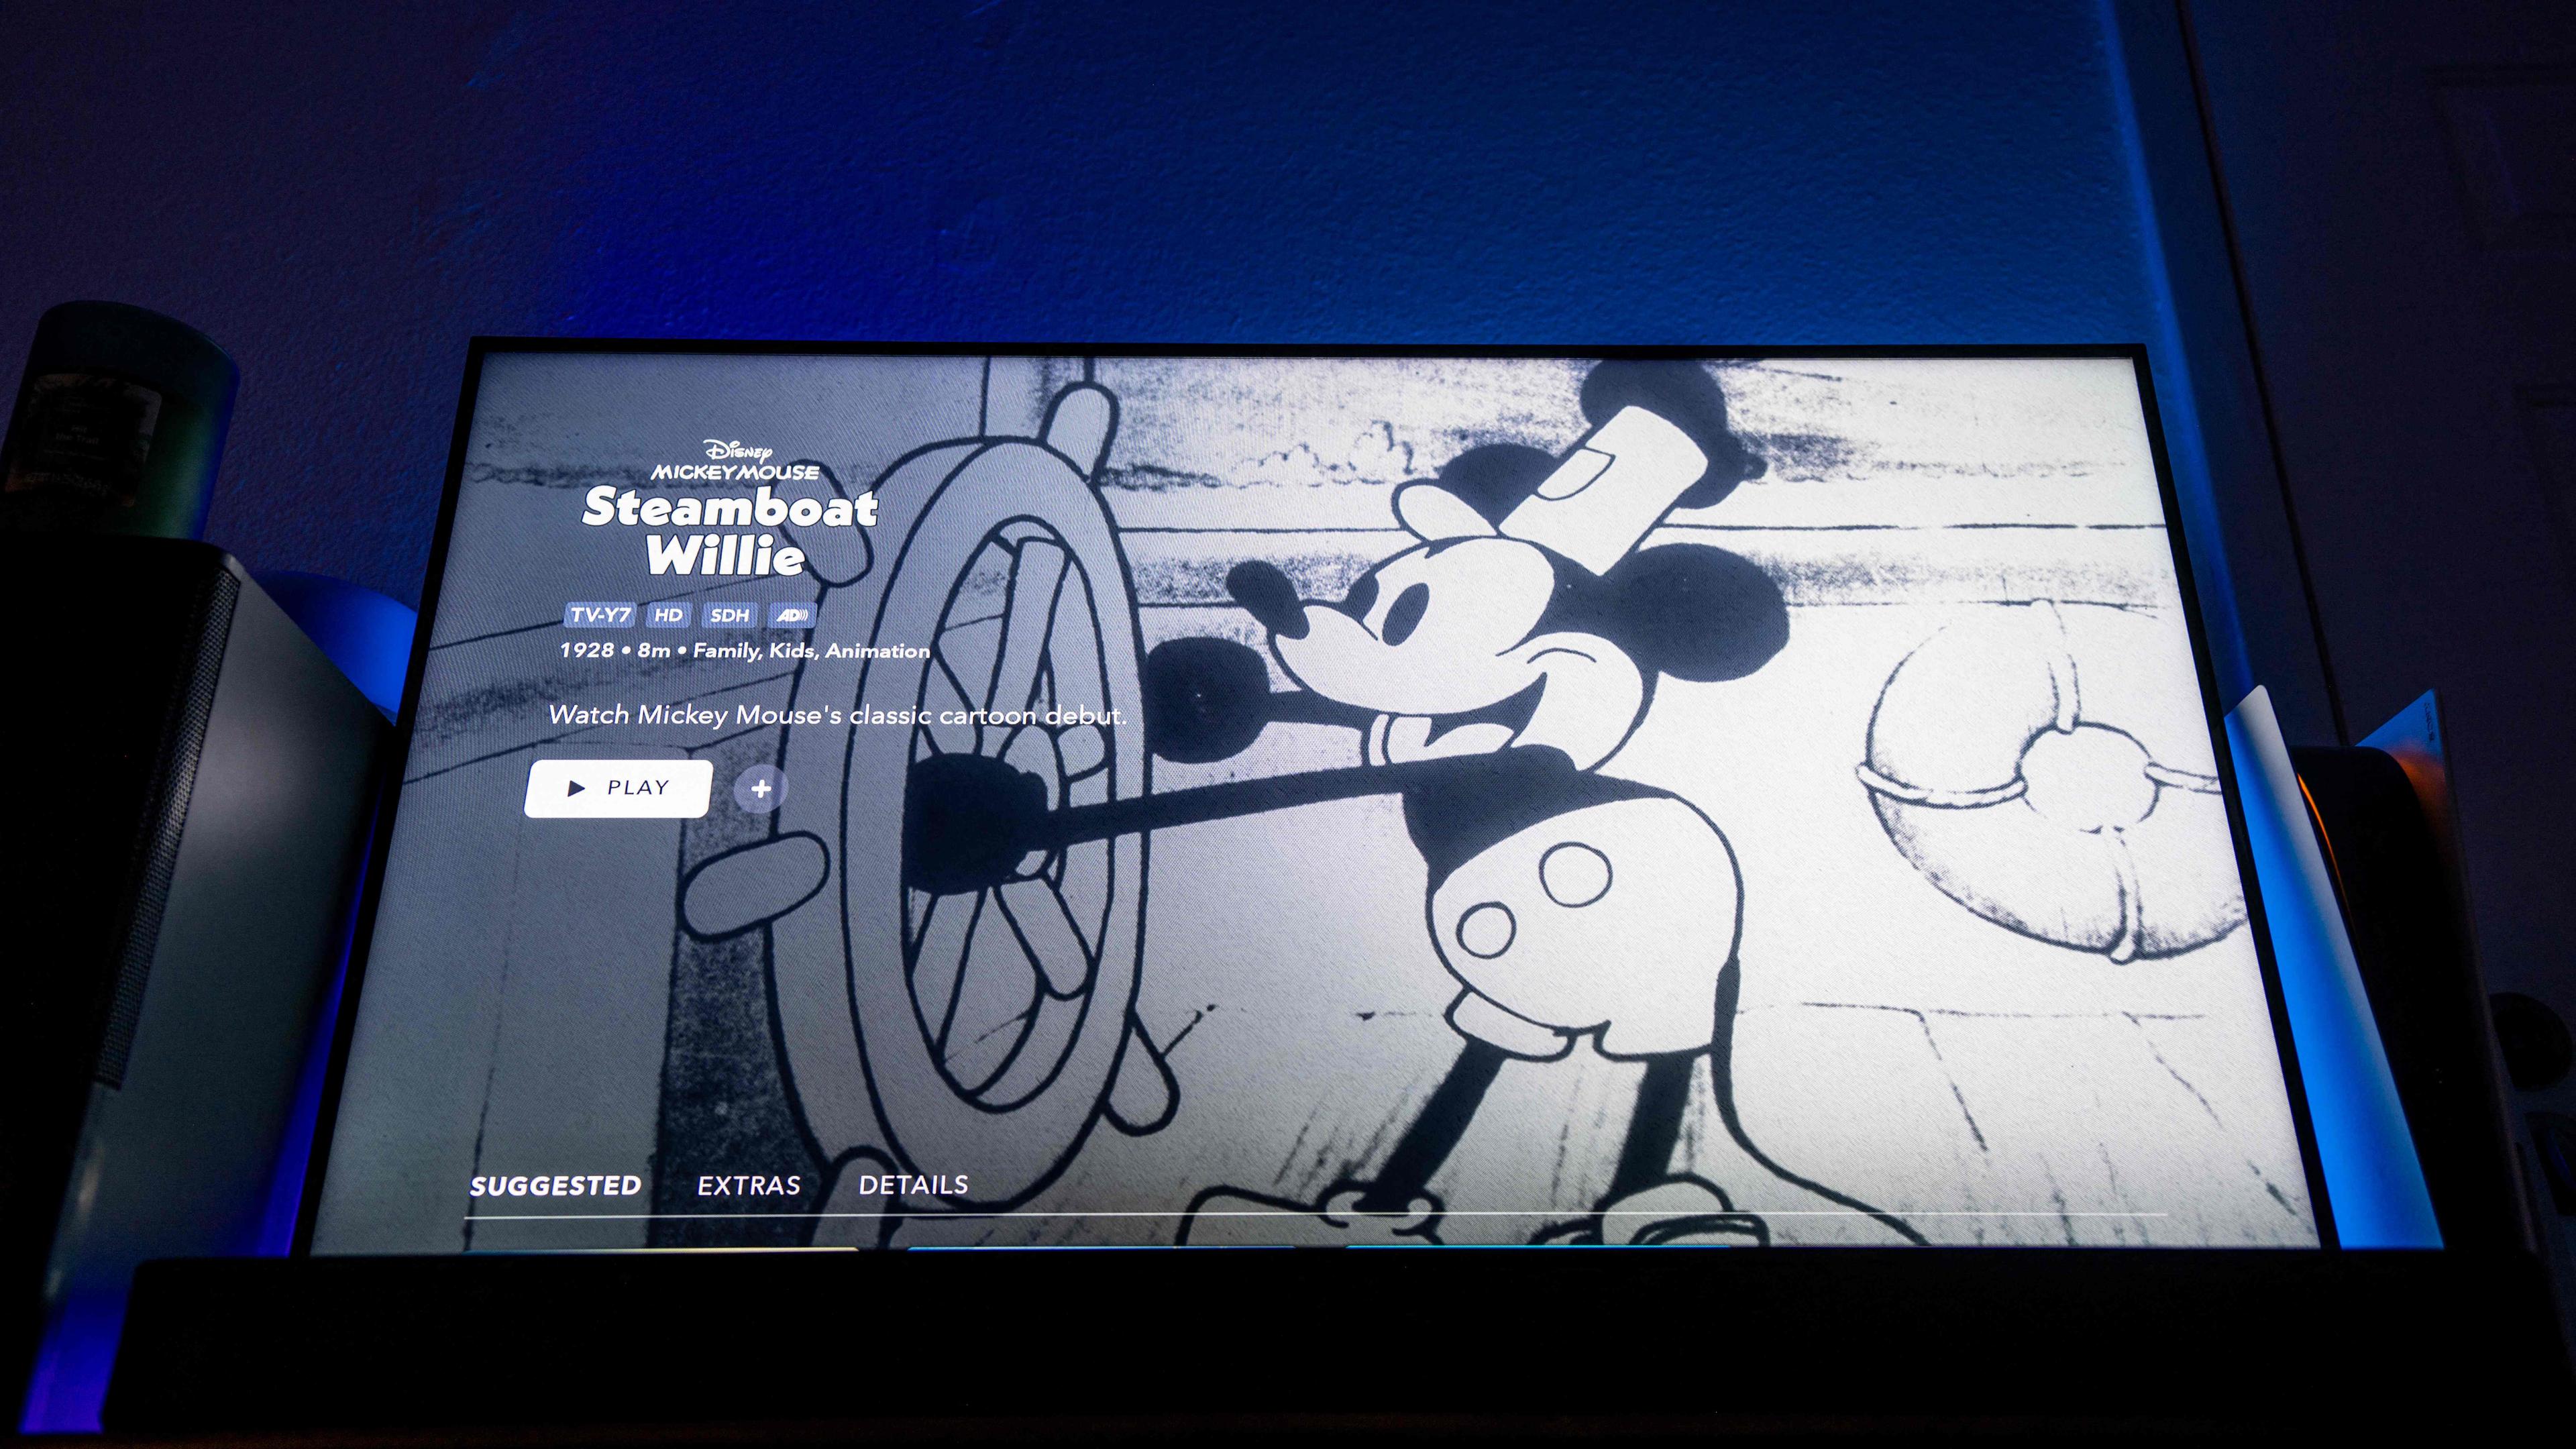 Filme de terror com Mickey Mouse é anunciado após domínio público